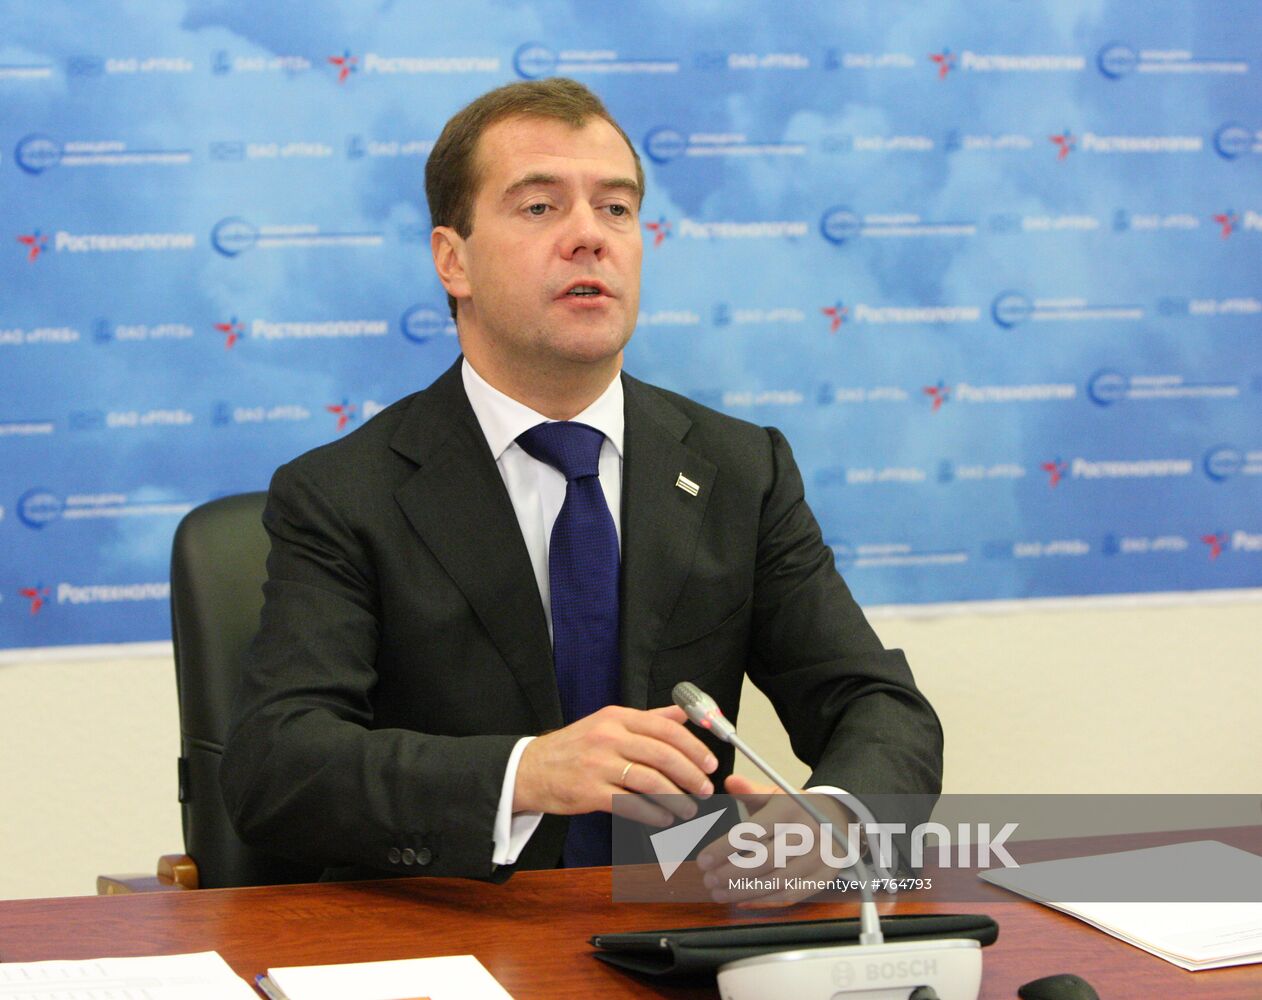 Russian President Medvedev at Ramenskoye